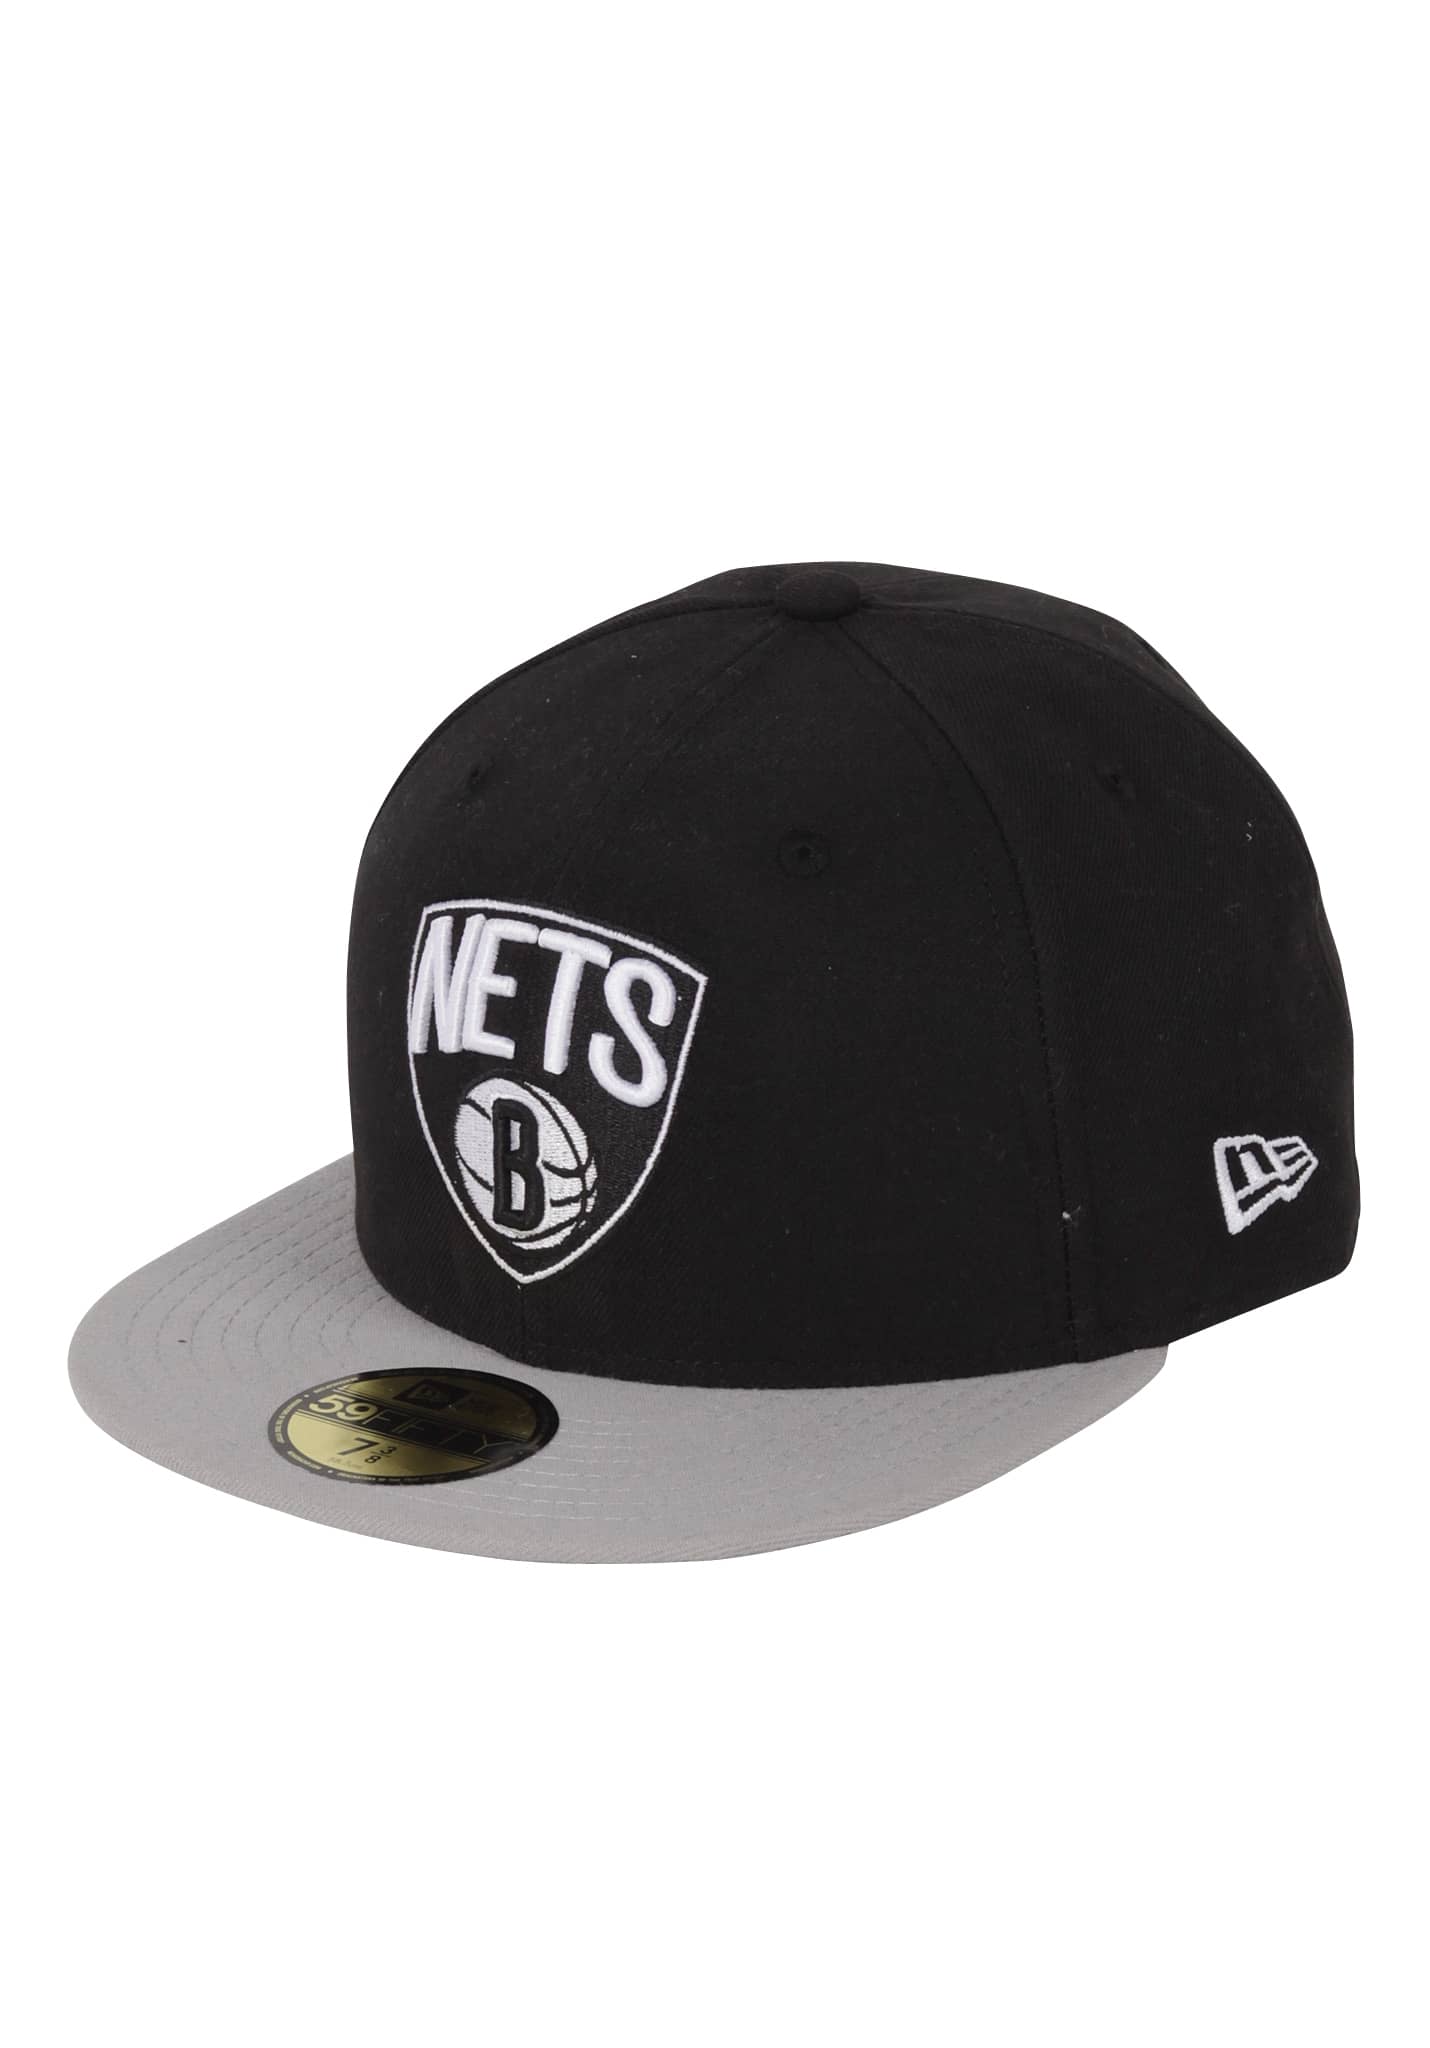 New Era NBA Basic Brooklyn Nets Caps black-grey 7 5-8inch Fitted Cap